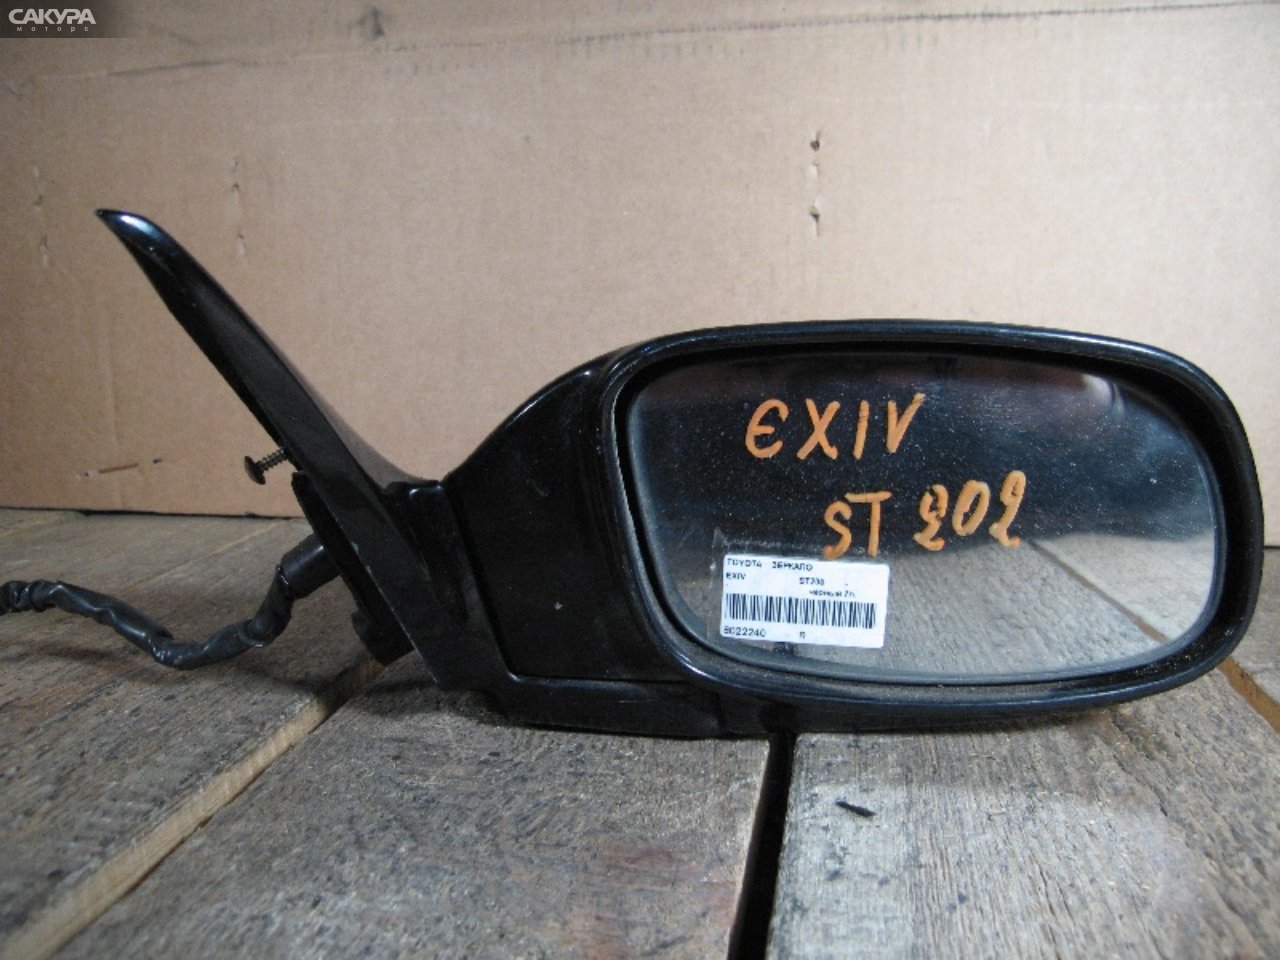 Зеркало боковое правое Toyota Corona Exiv ST200: купить в Сакура Абакан.